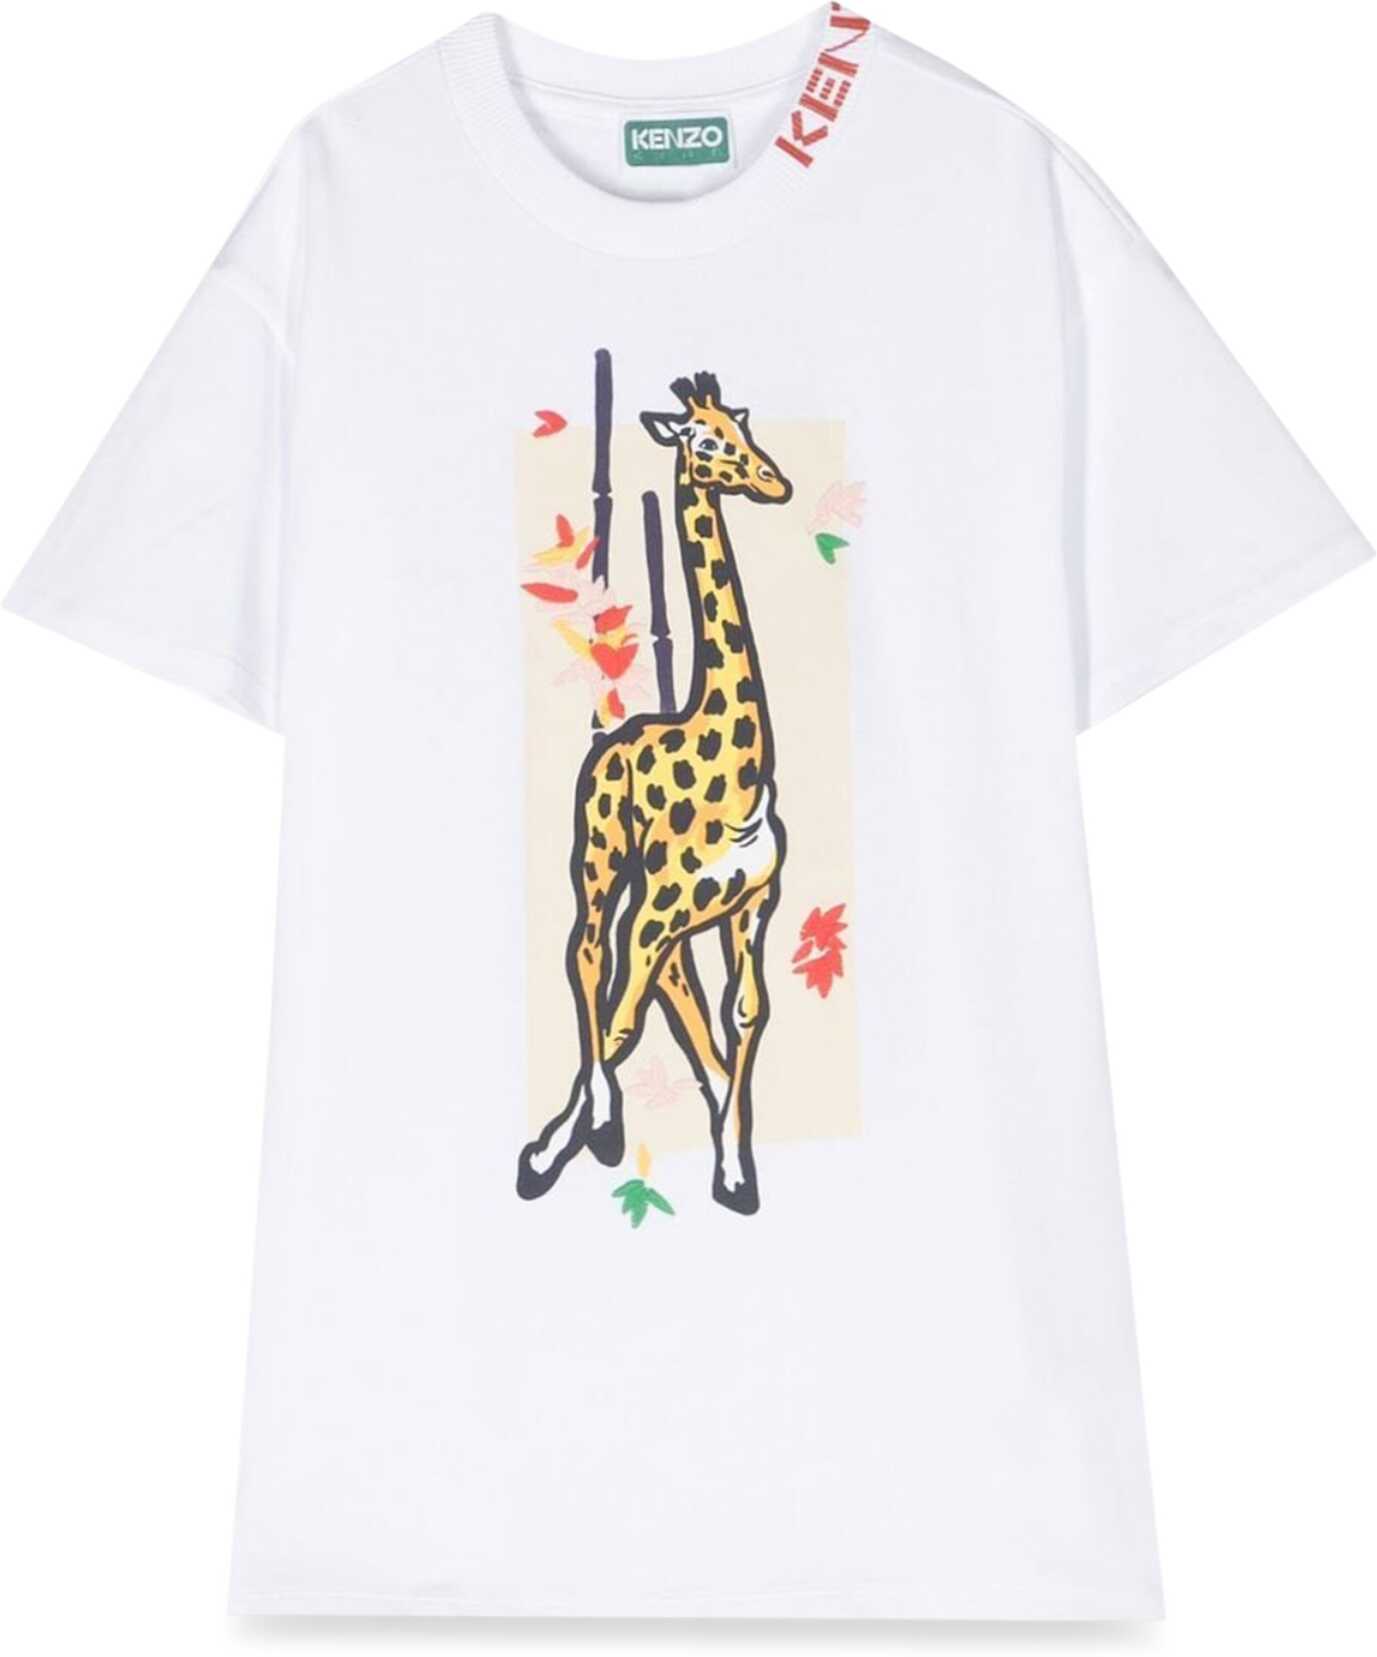 Poze Kenzo Giraffe T-Shirt Dress WHITE